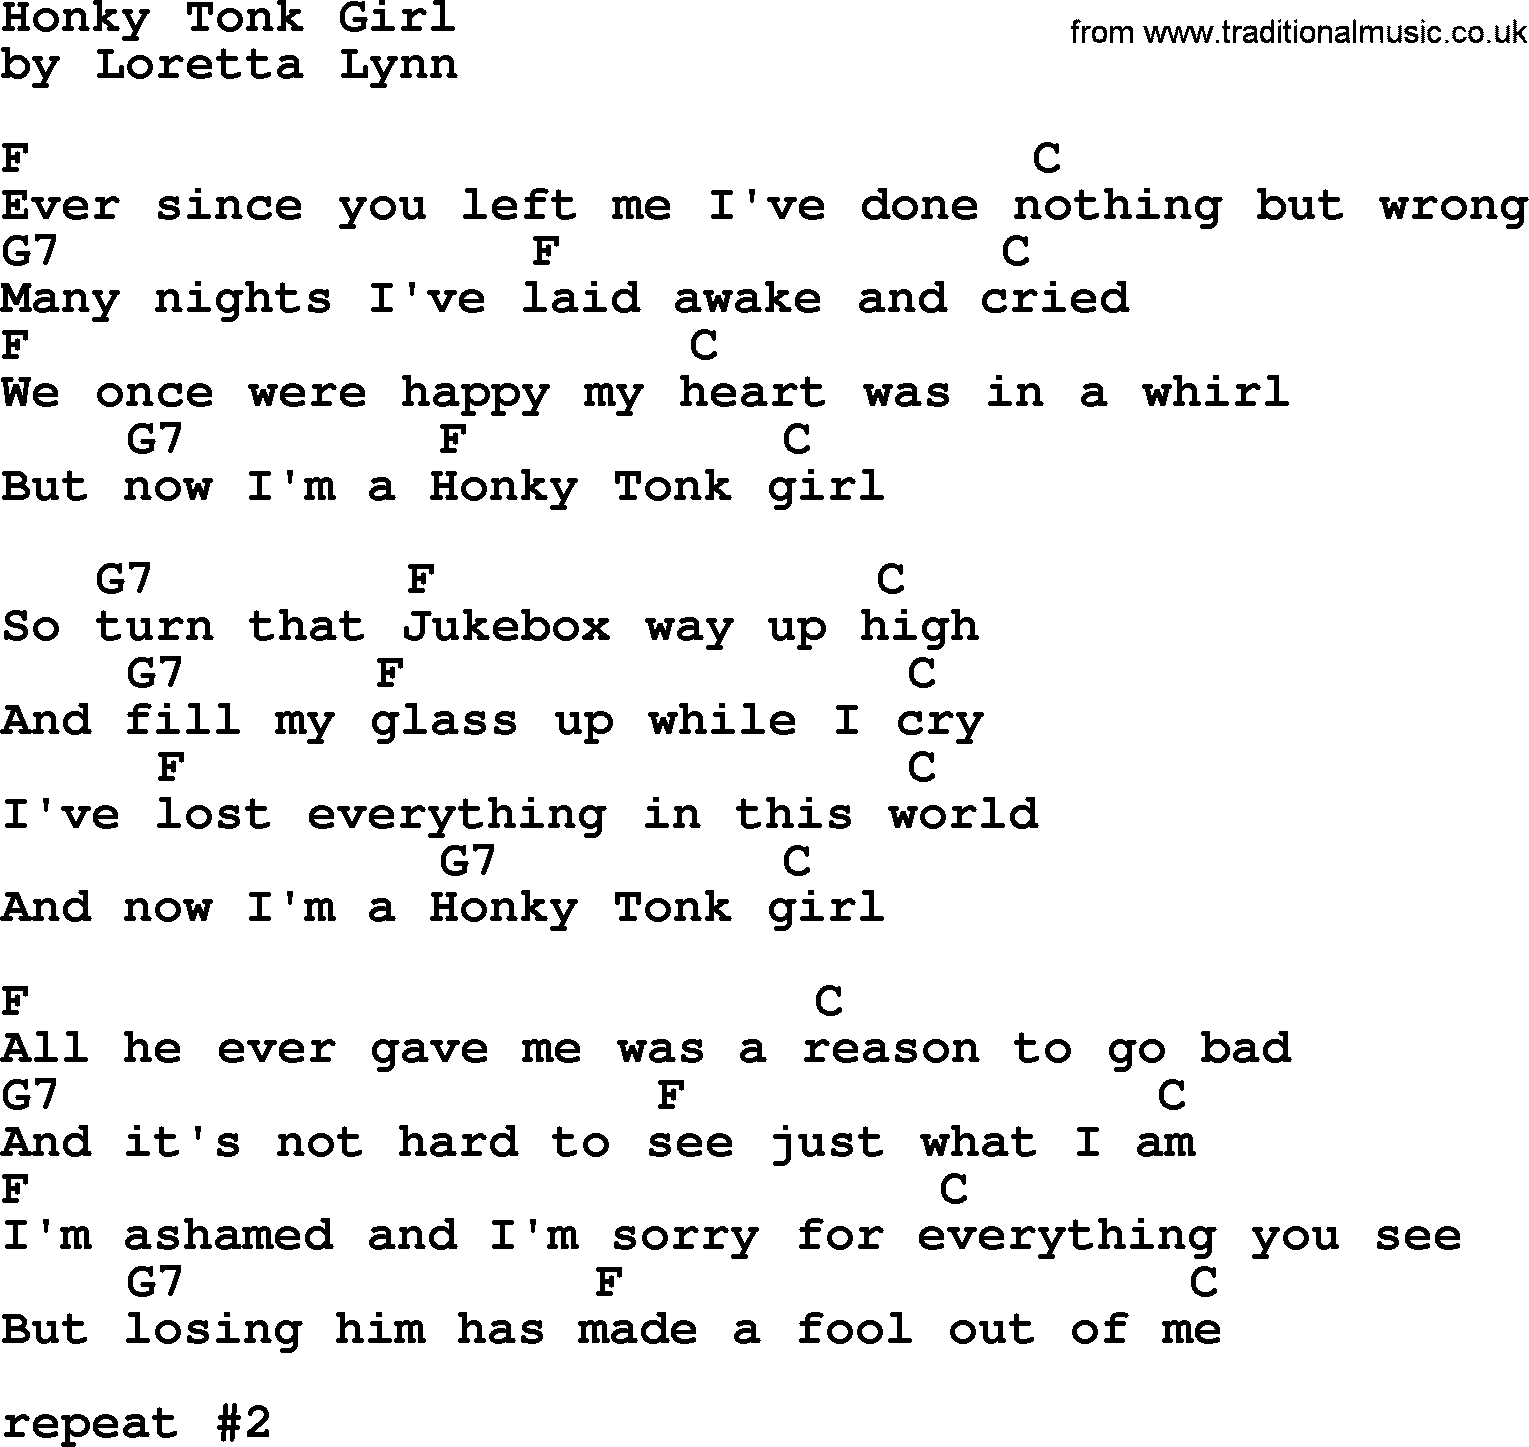 Loretta Lynn song: Honky Tonk Girl lyrics and chords